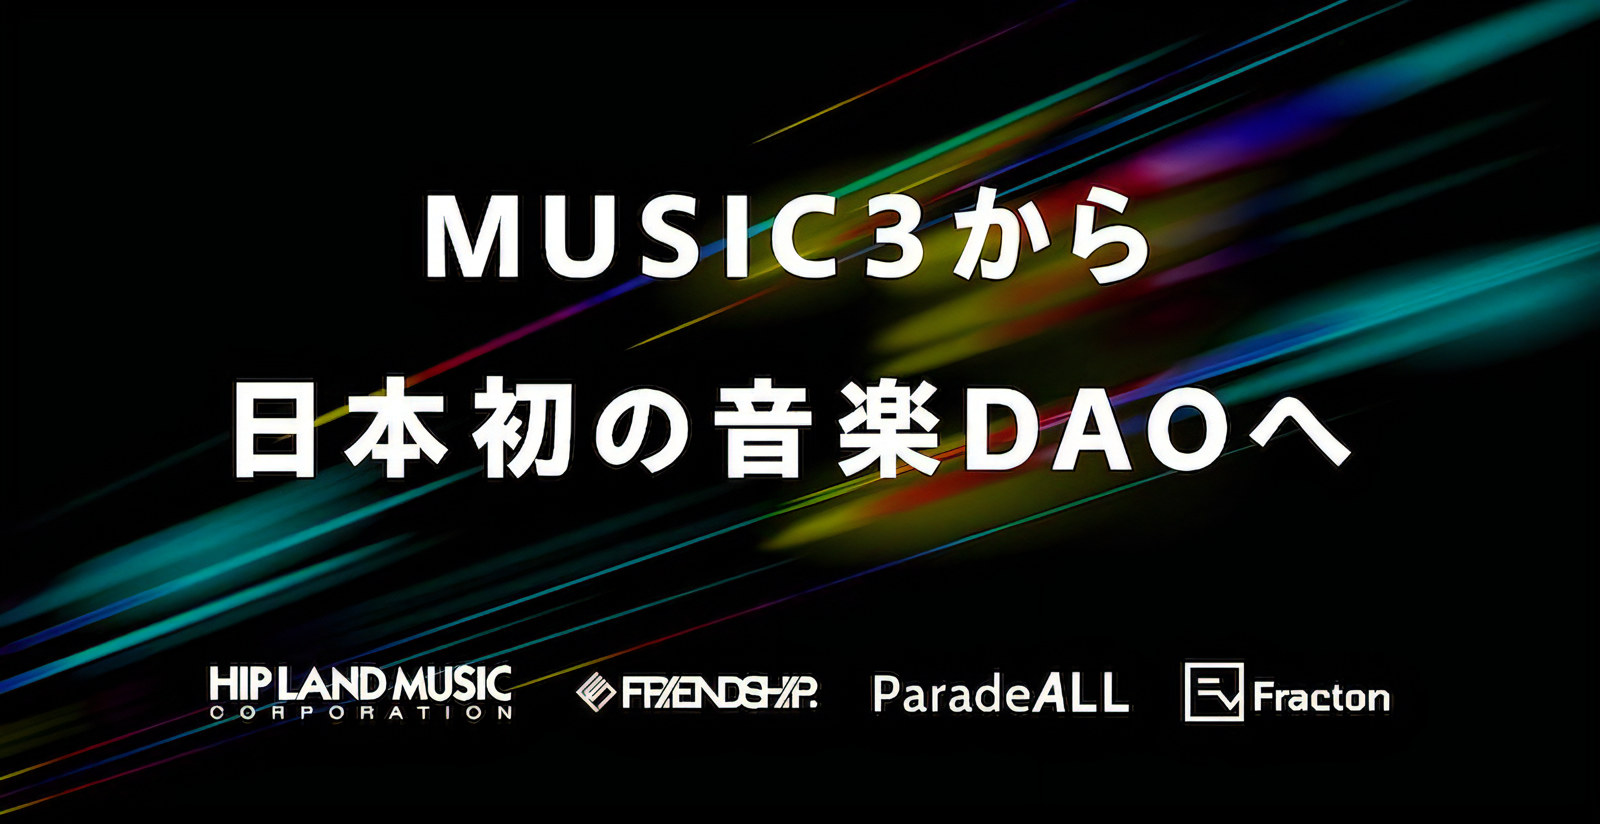 HIP LAND MUSICが日本初の音楽DAO「FRIENDSHIP.DAO」を始動―Web3時代の音楽コミュニティ構築を目指す